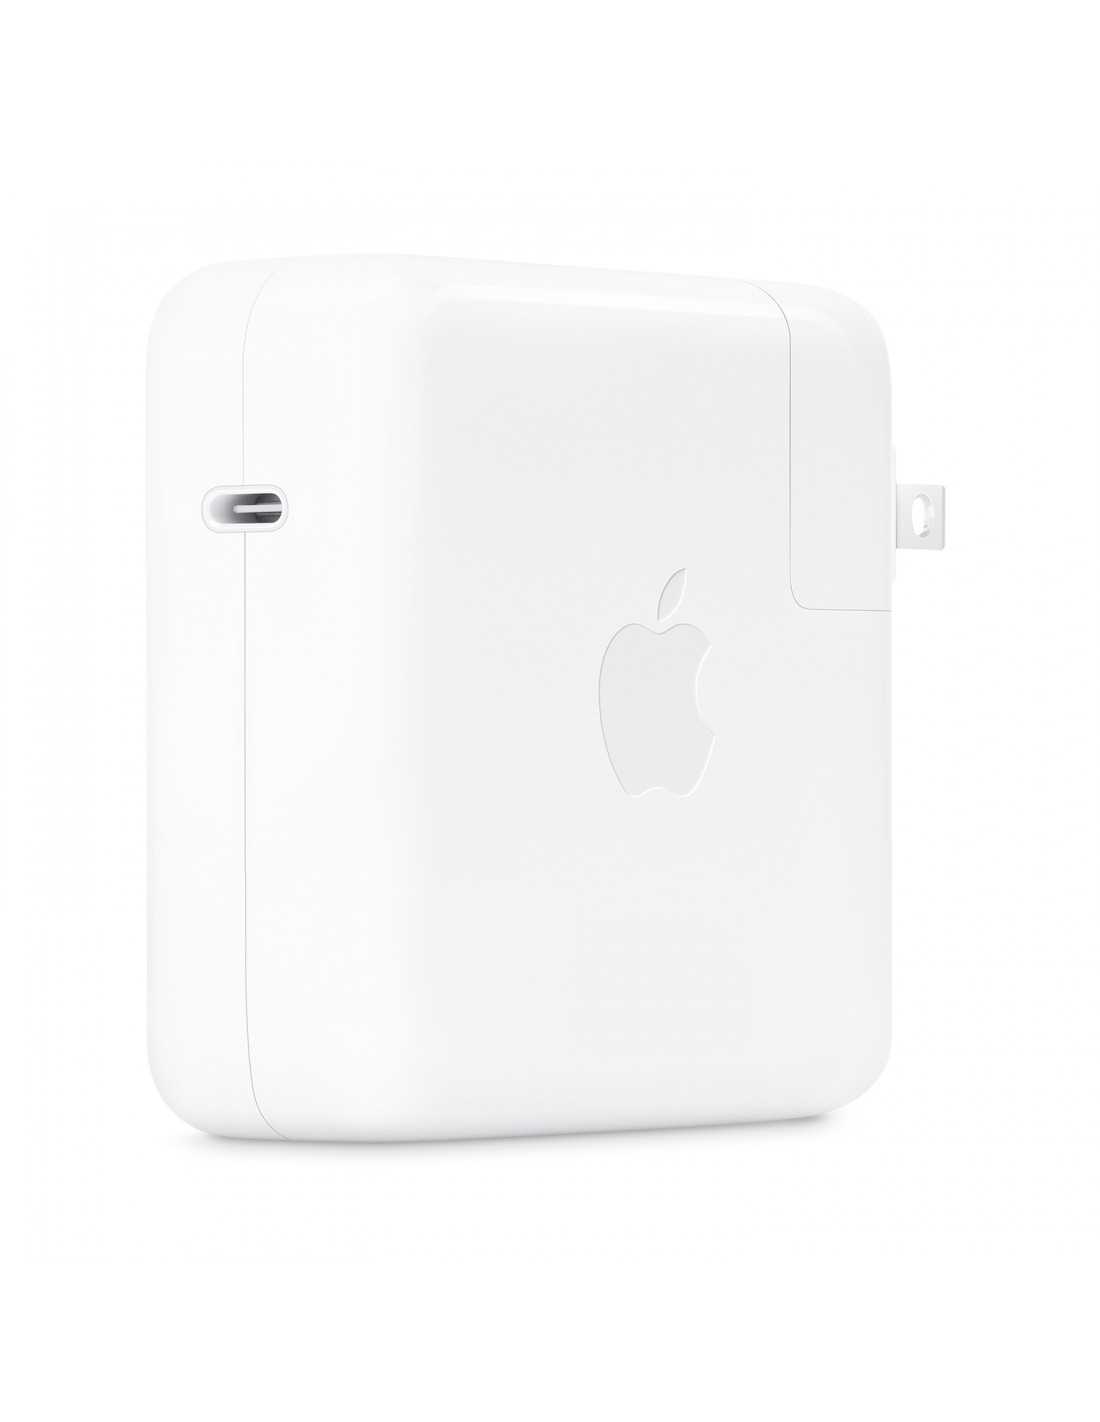 cargador macbook, cargador mac, cargador apple, cargadores macbook